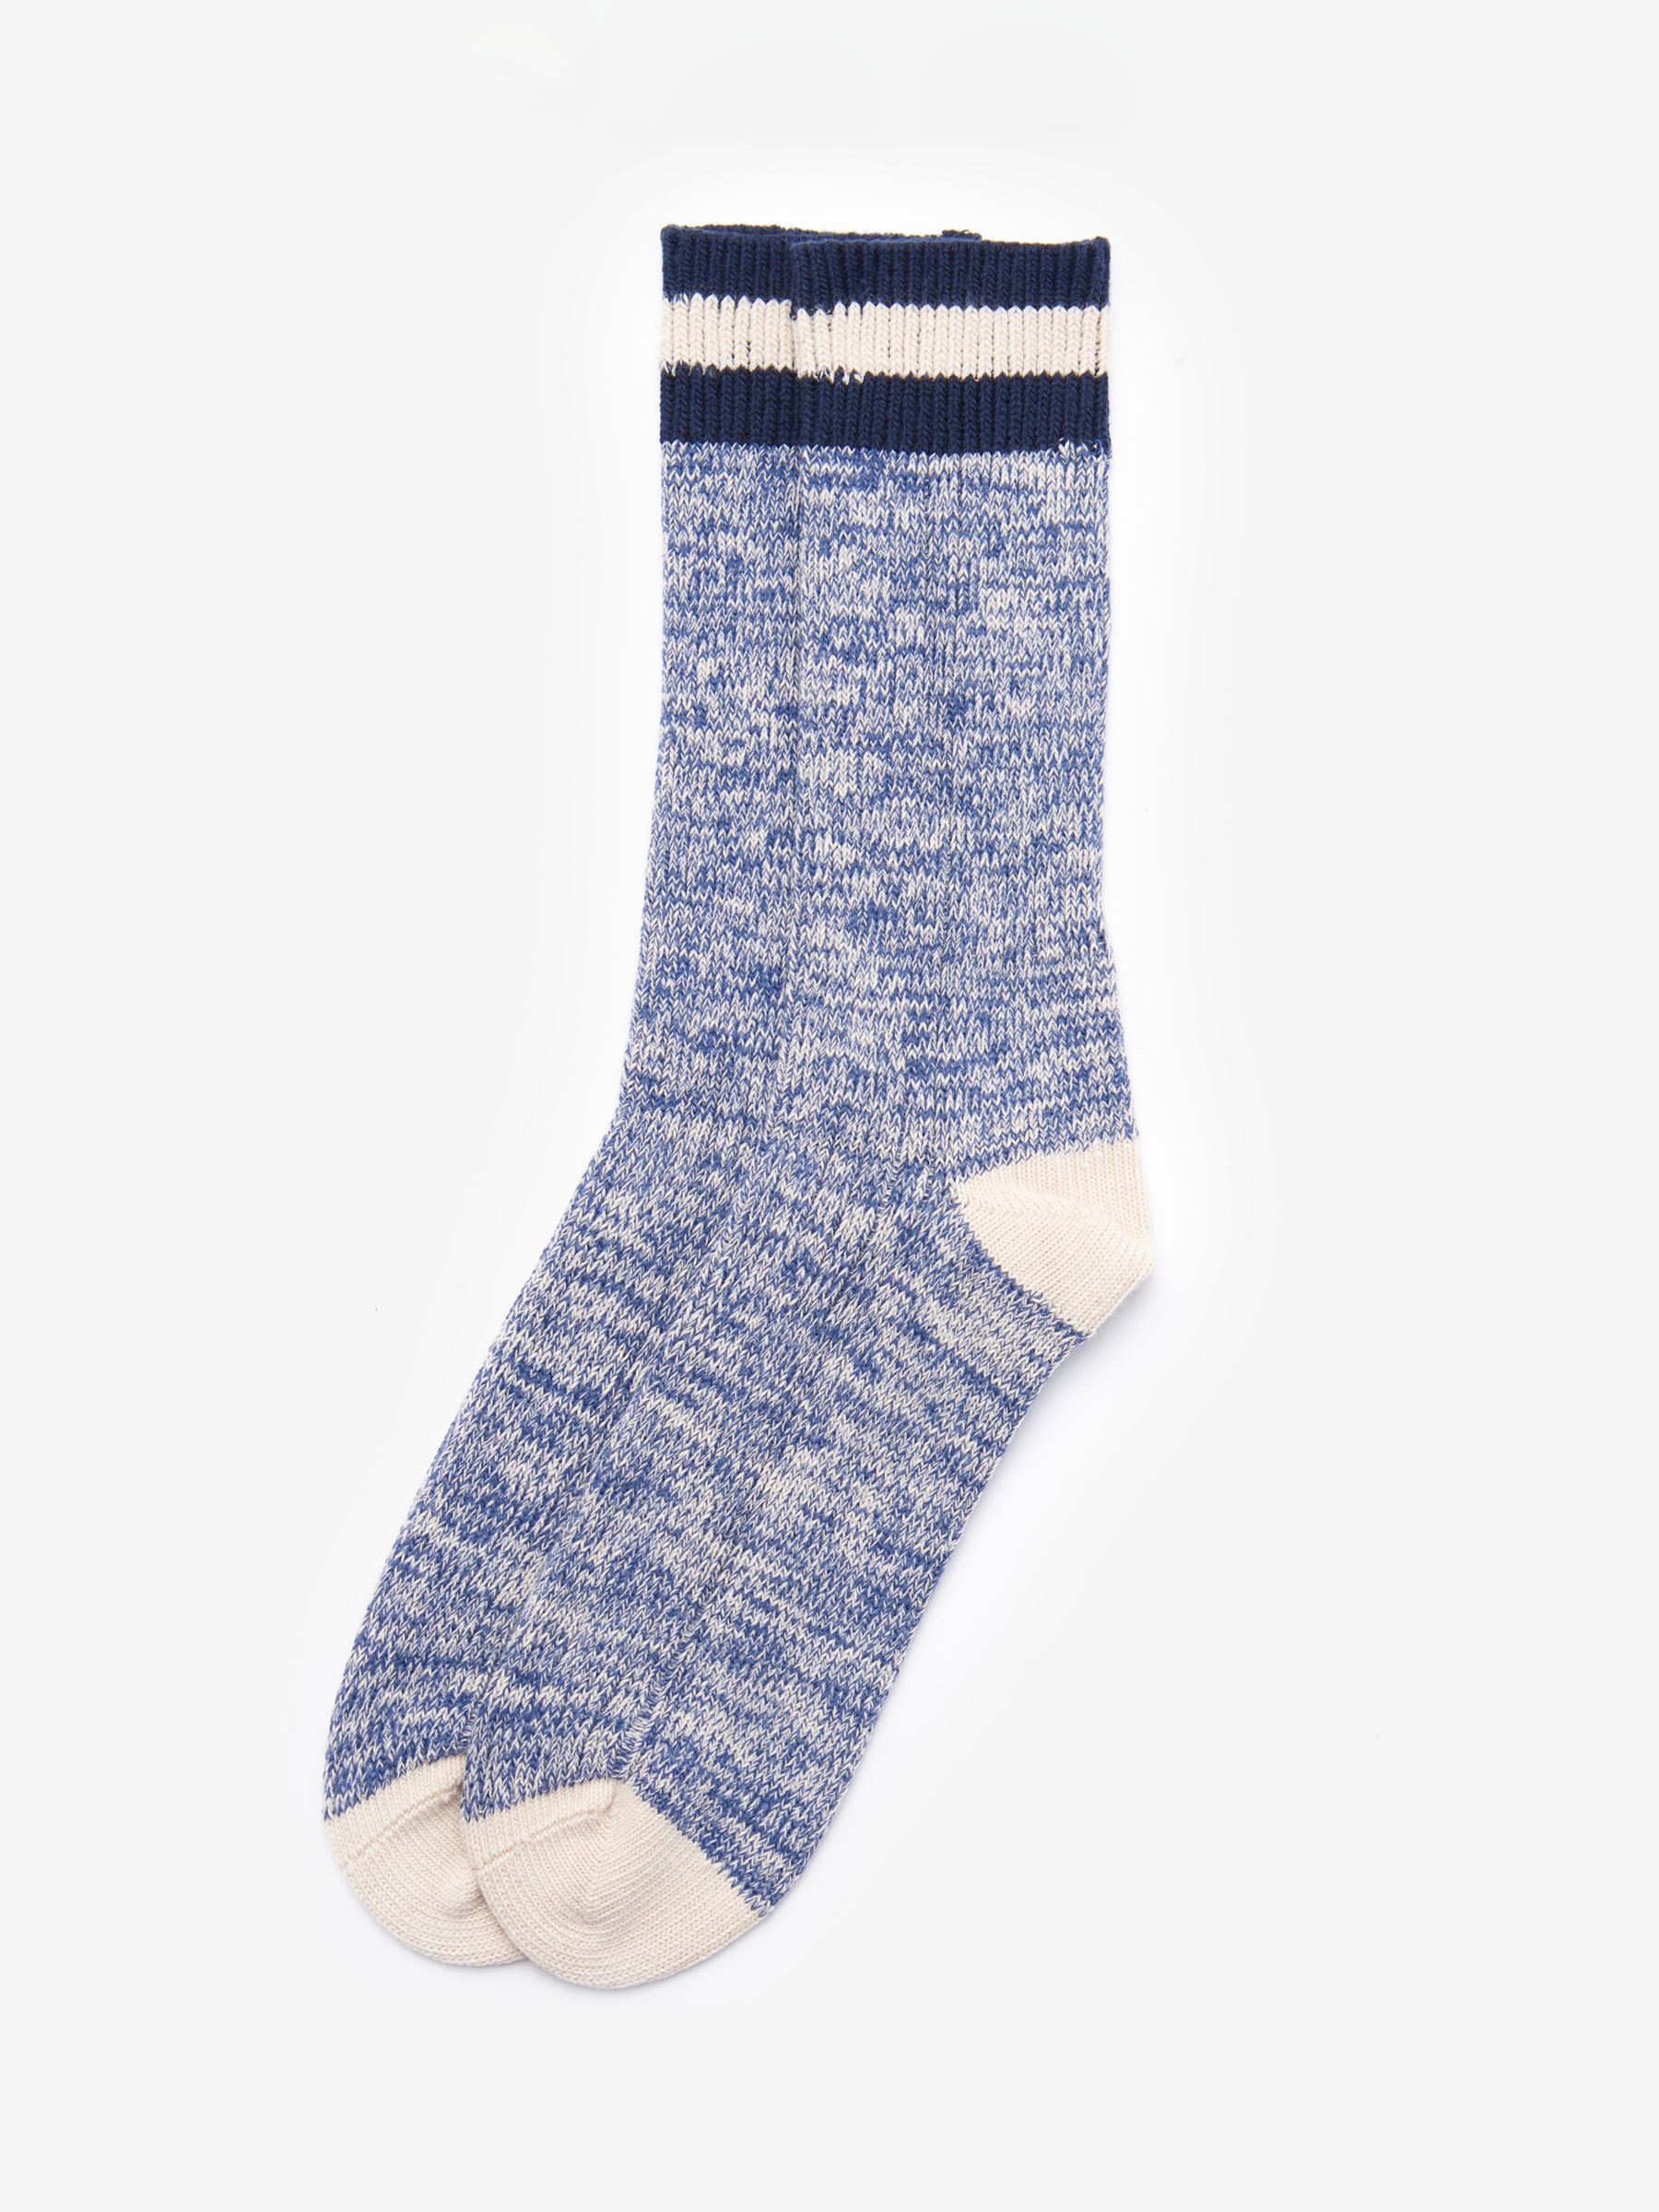 Barbour Shandwick Socks, One Size, Navy, M